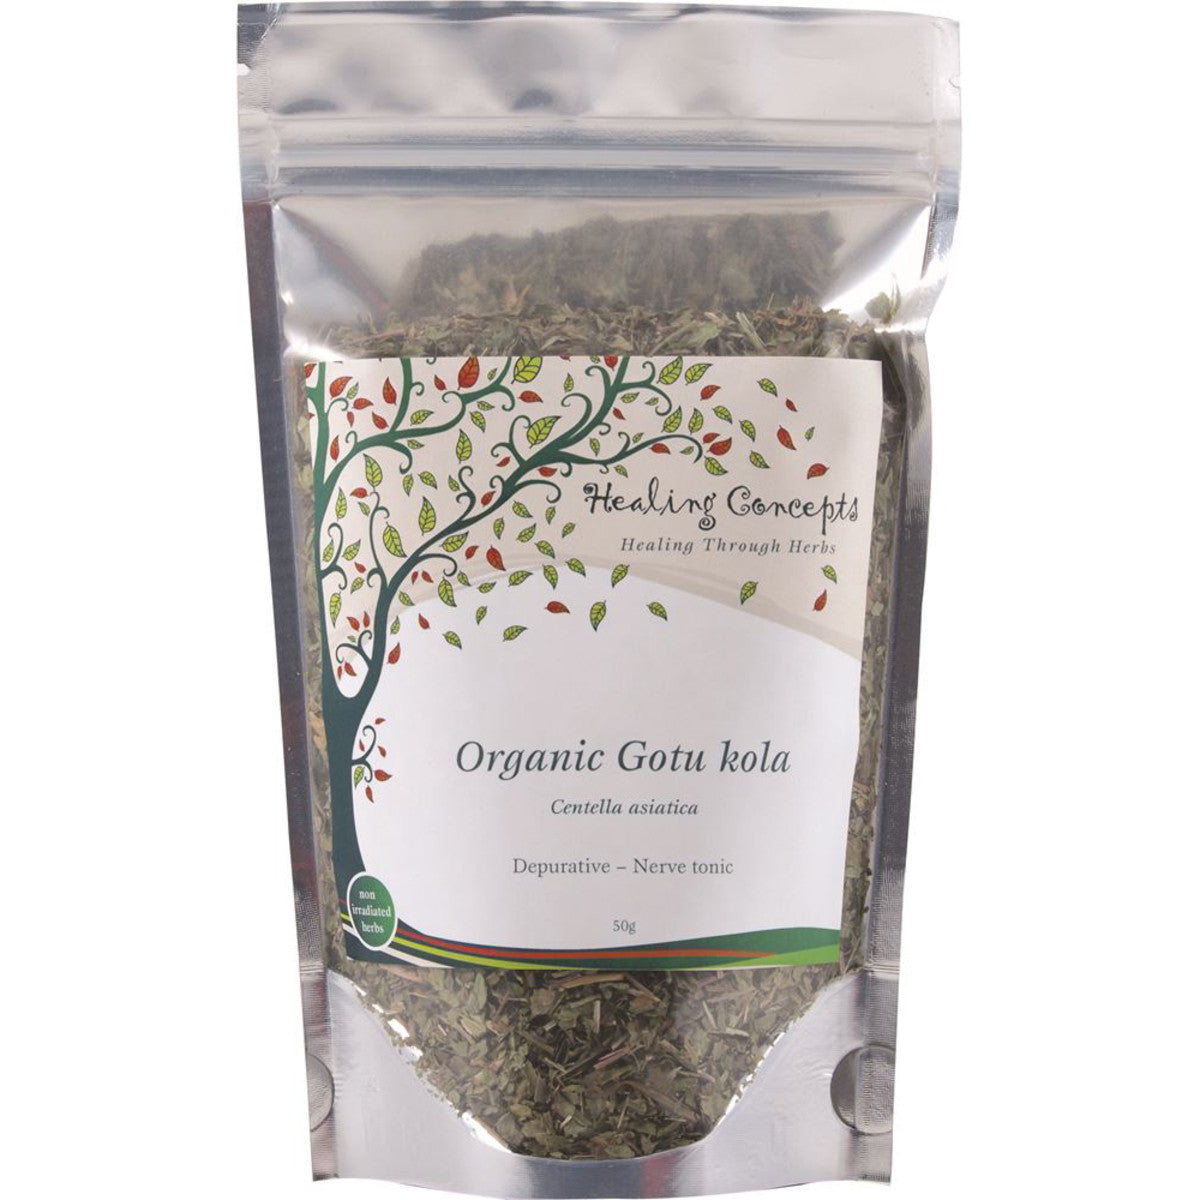 Healing Concepts - Organic Gotu Kola Tea